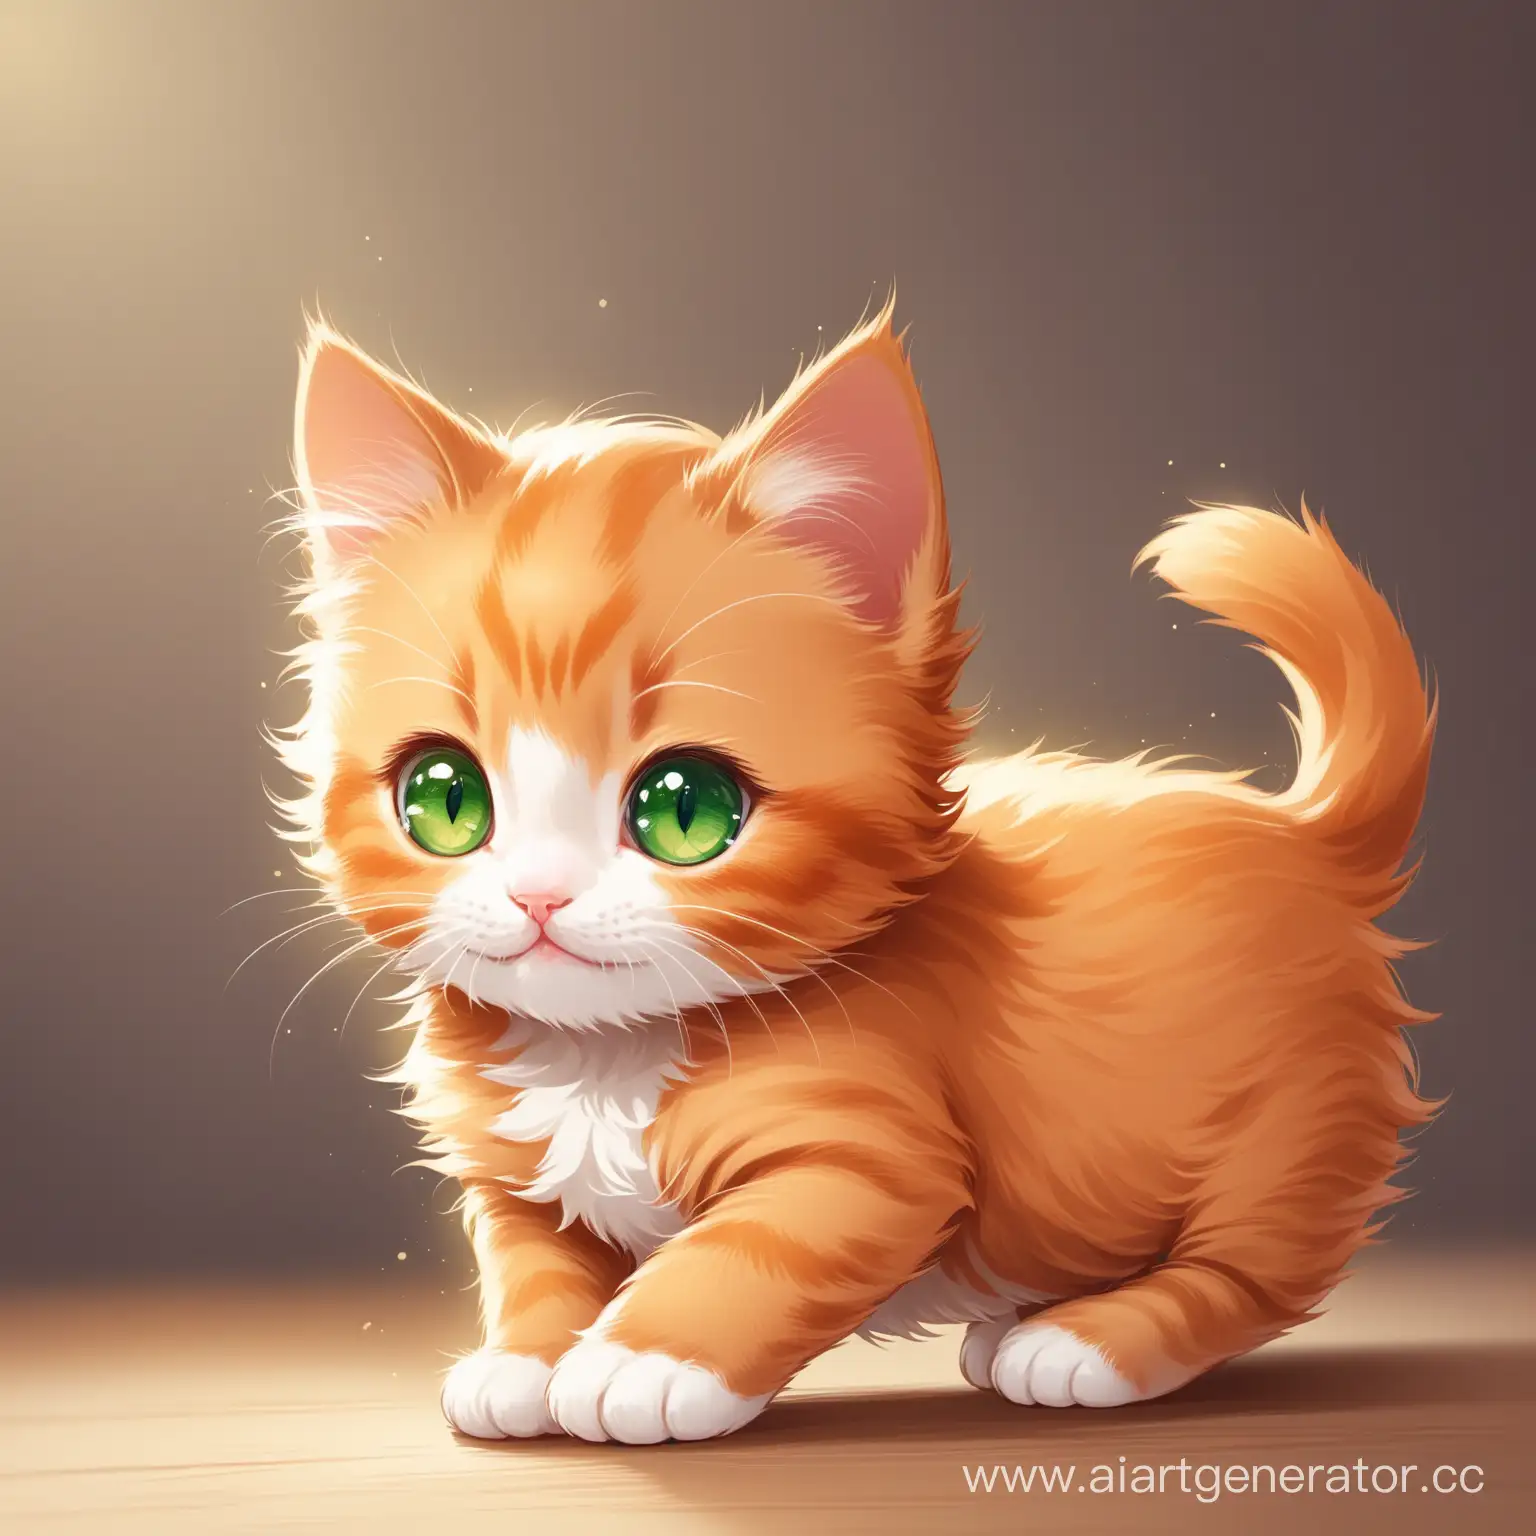 Adorable-Ginger-Kitten-with-Striking-Green-Eyes